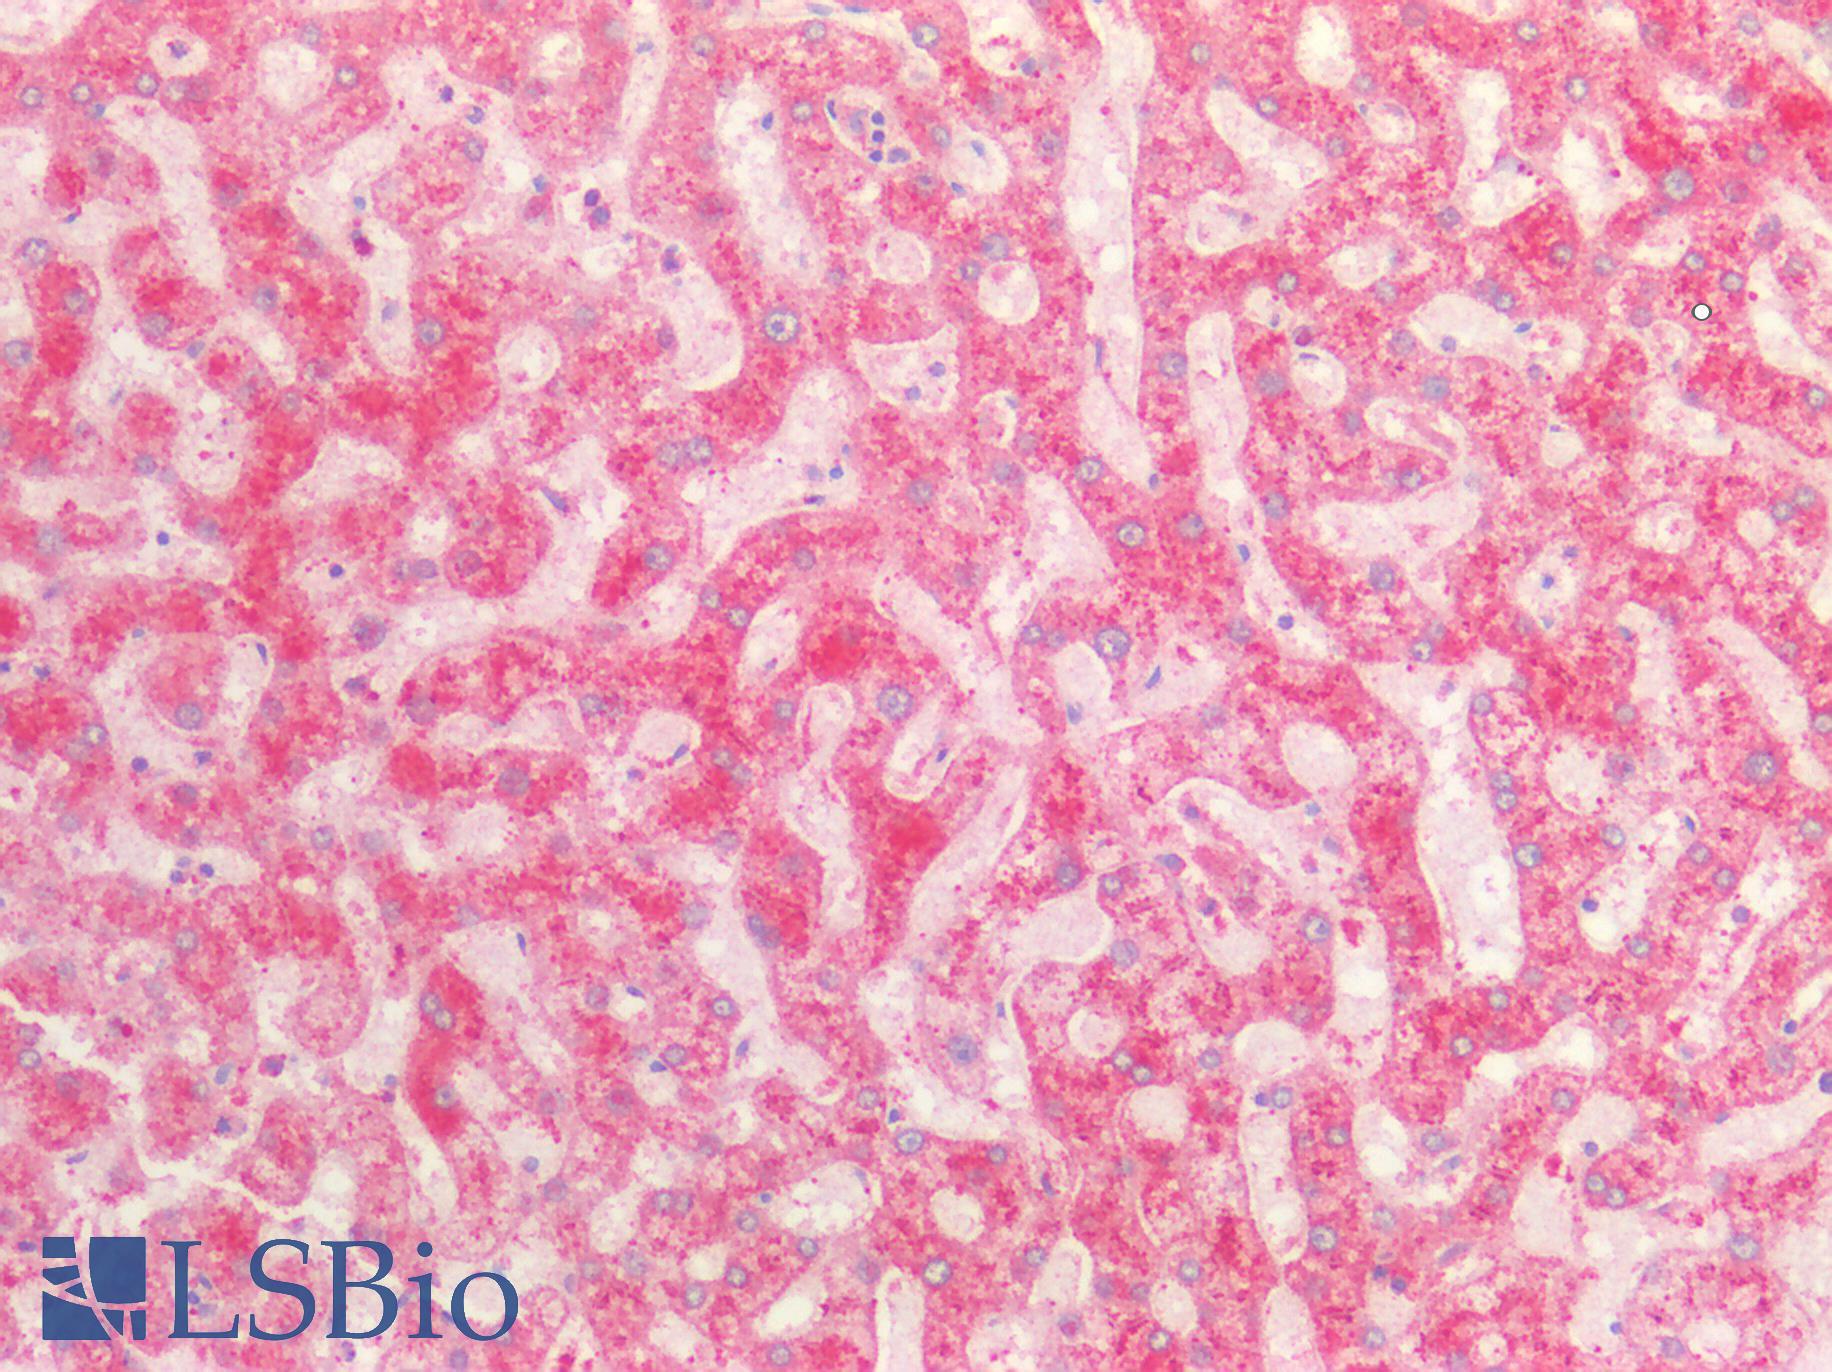 FGA / Fibrinogen Alpha Antibody - Human Liver: Formalin-Fixed, Paraffin-Embedded (FFPE)